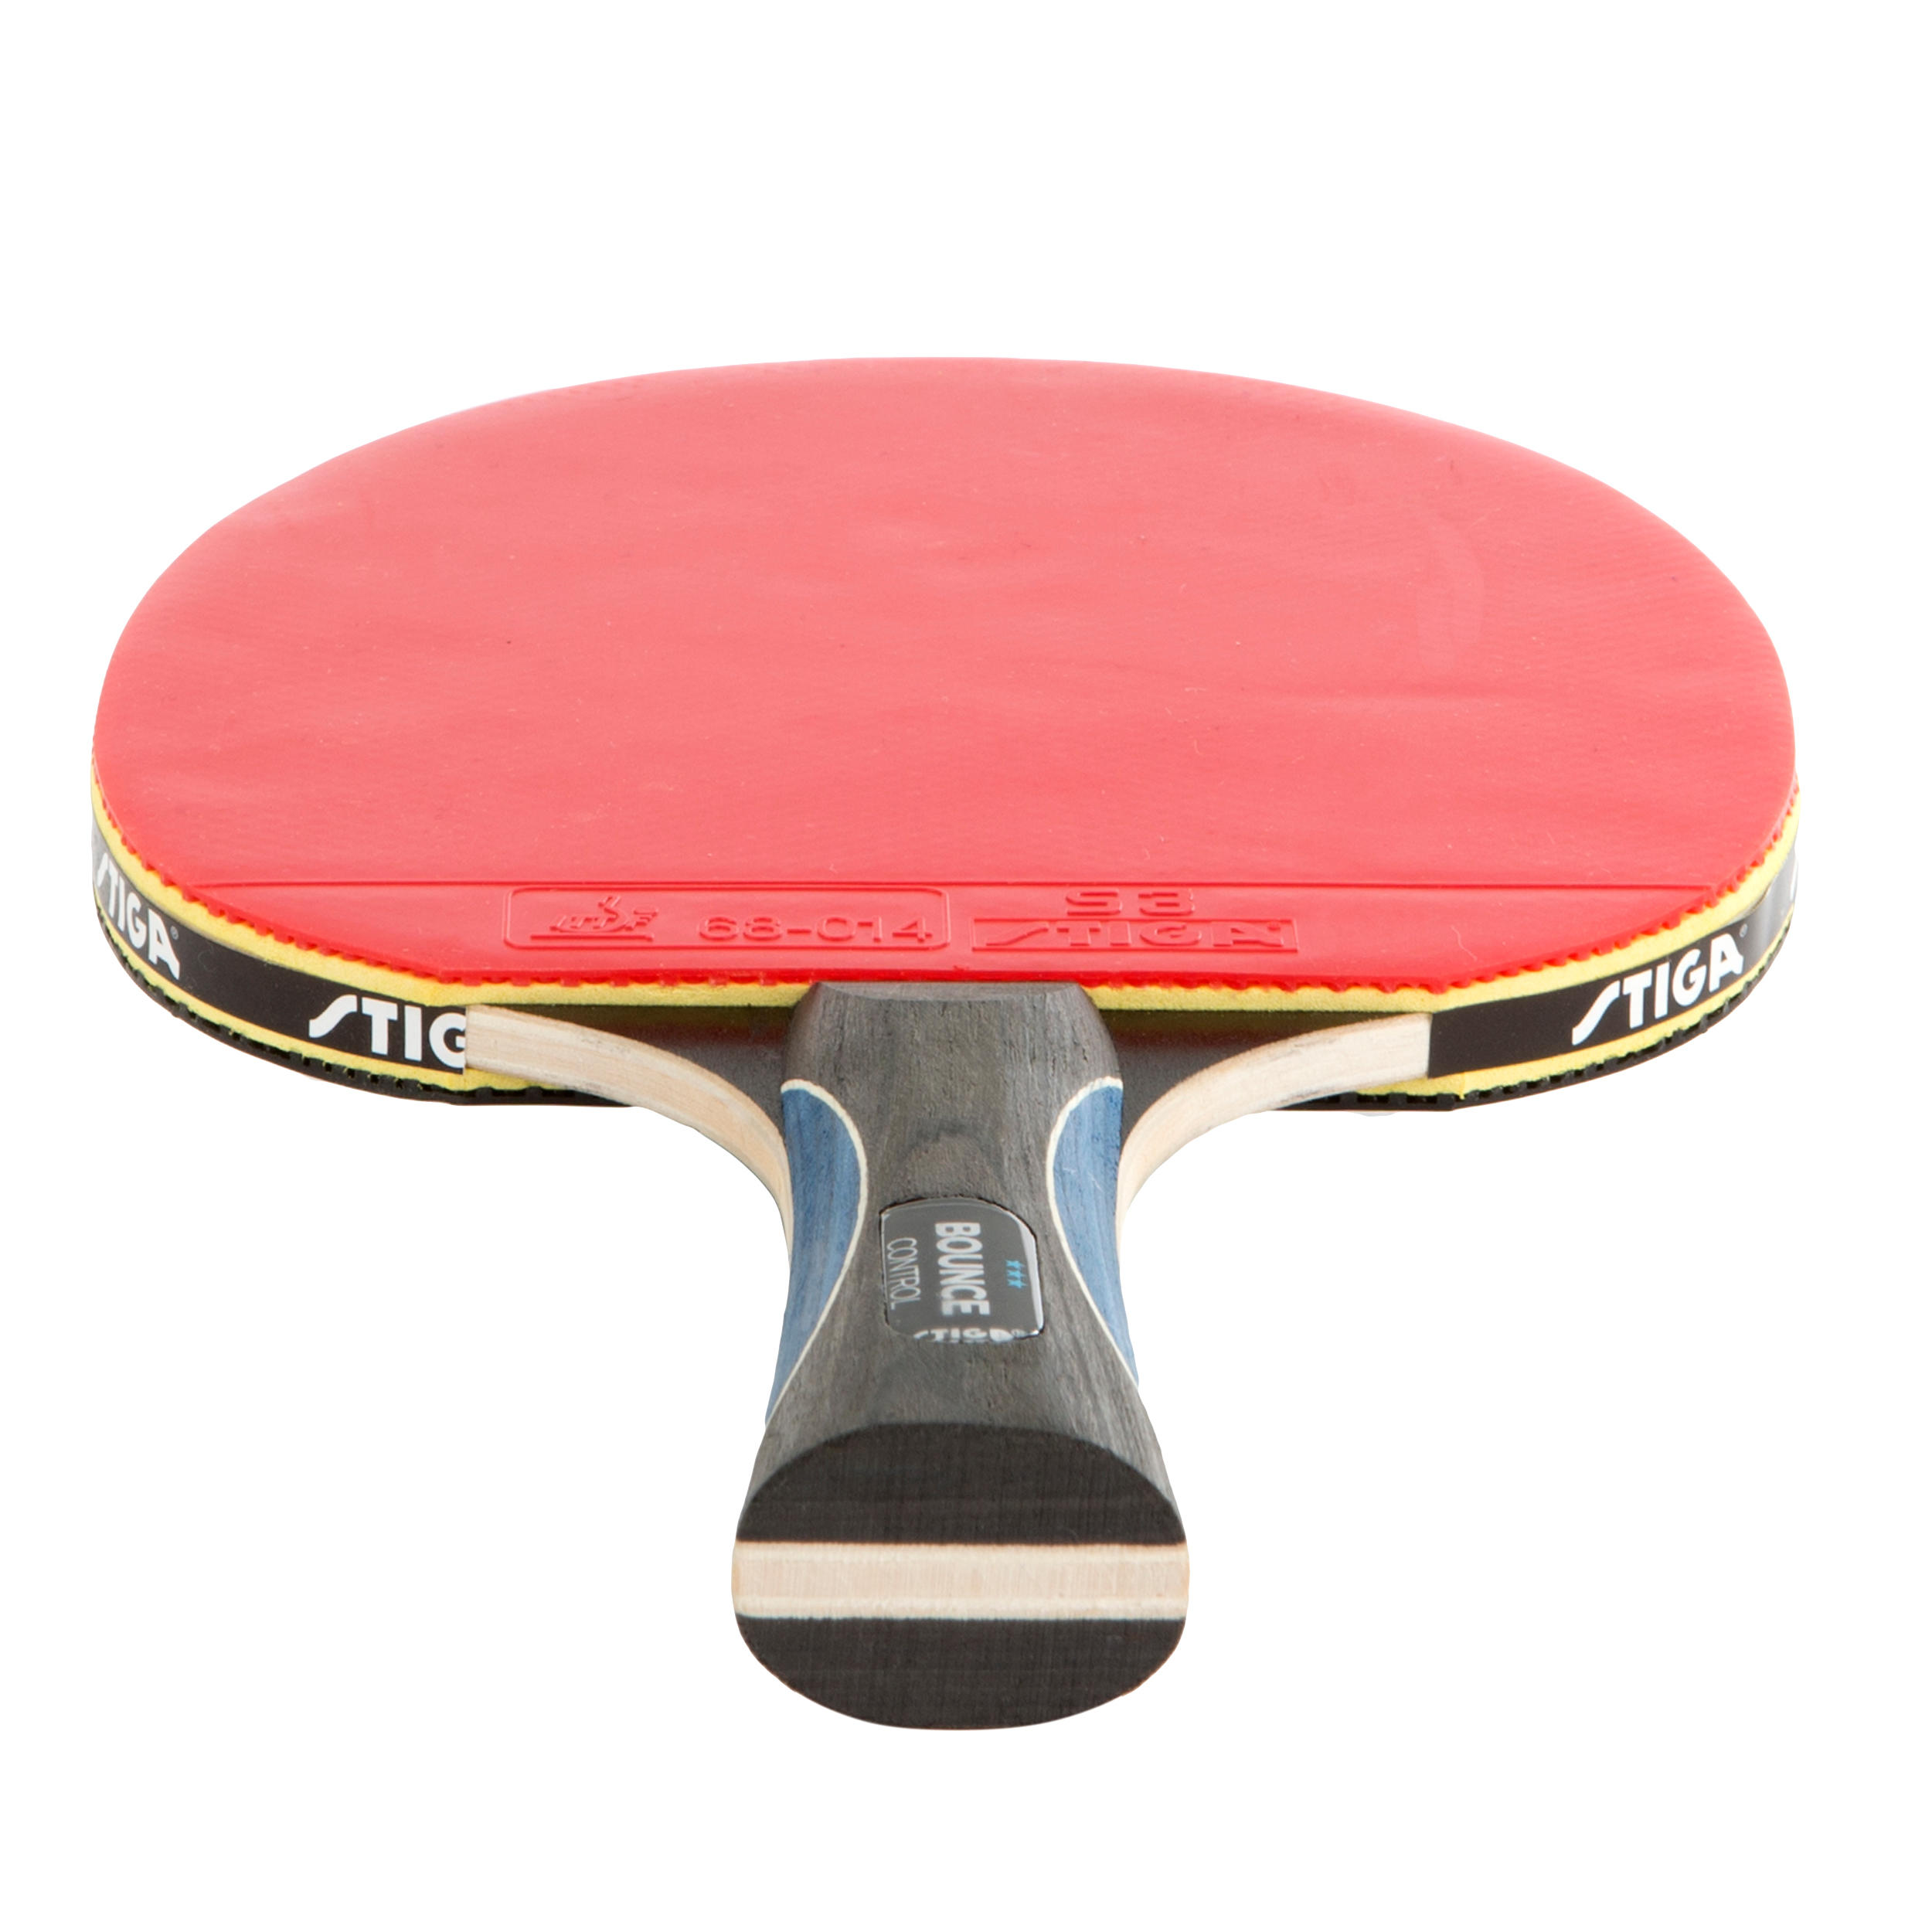 Club Table Tennis Bat Bounce Control 3* 12/15